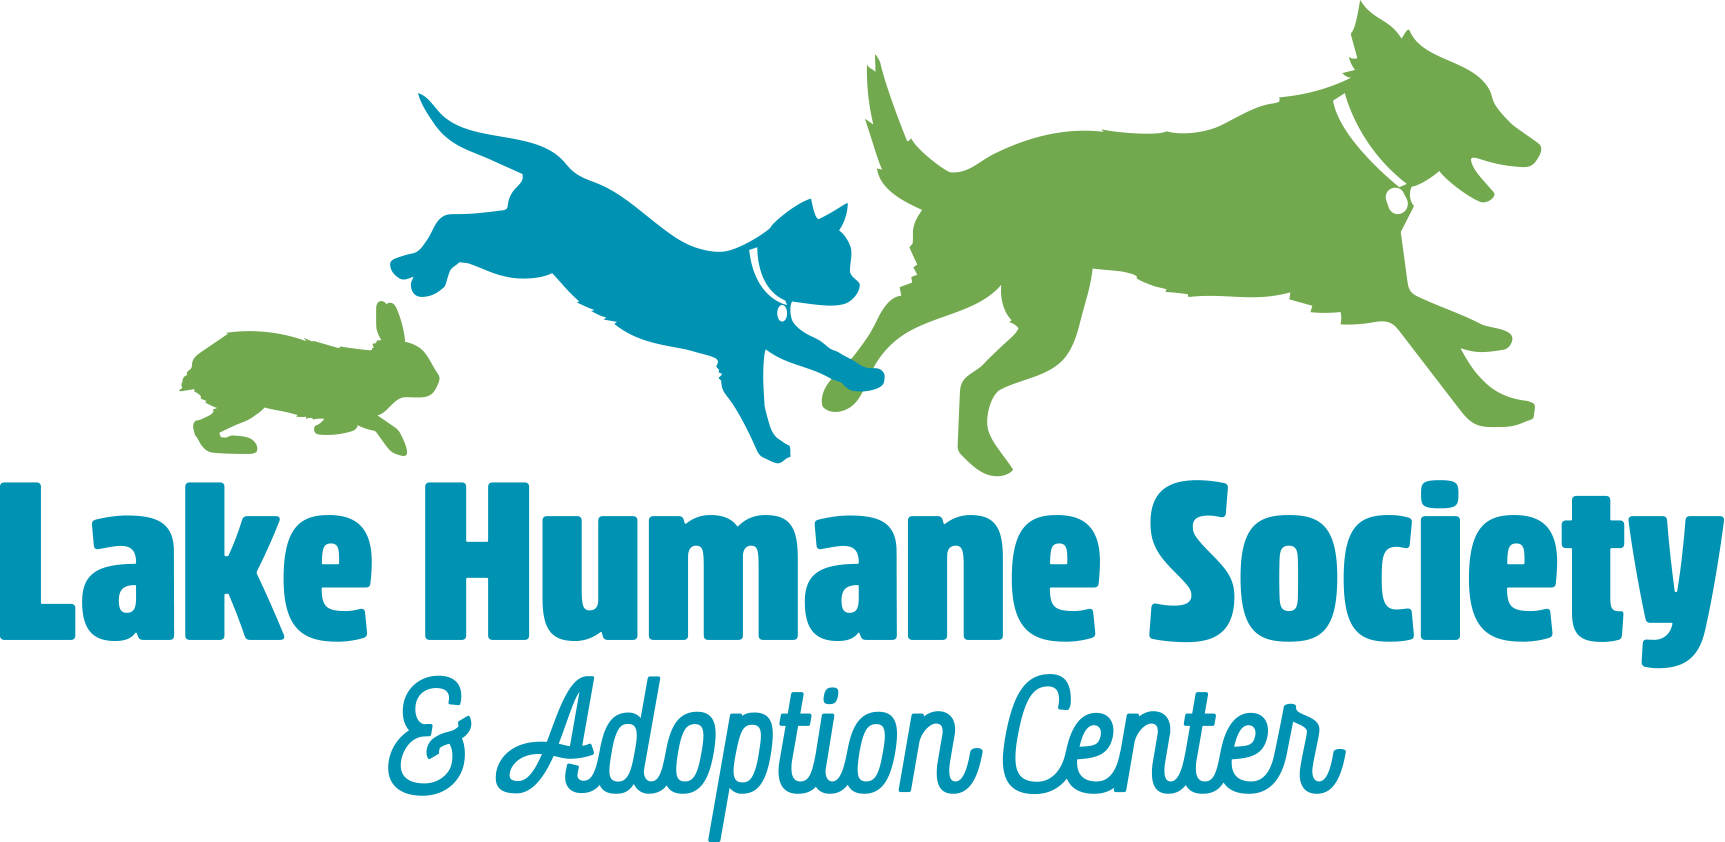 Humane Society. Greenville Humane Society план. Bullitt County Humane Society. Humane Society Chillicothe Ohio. Human society